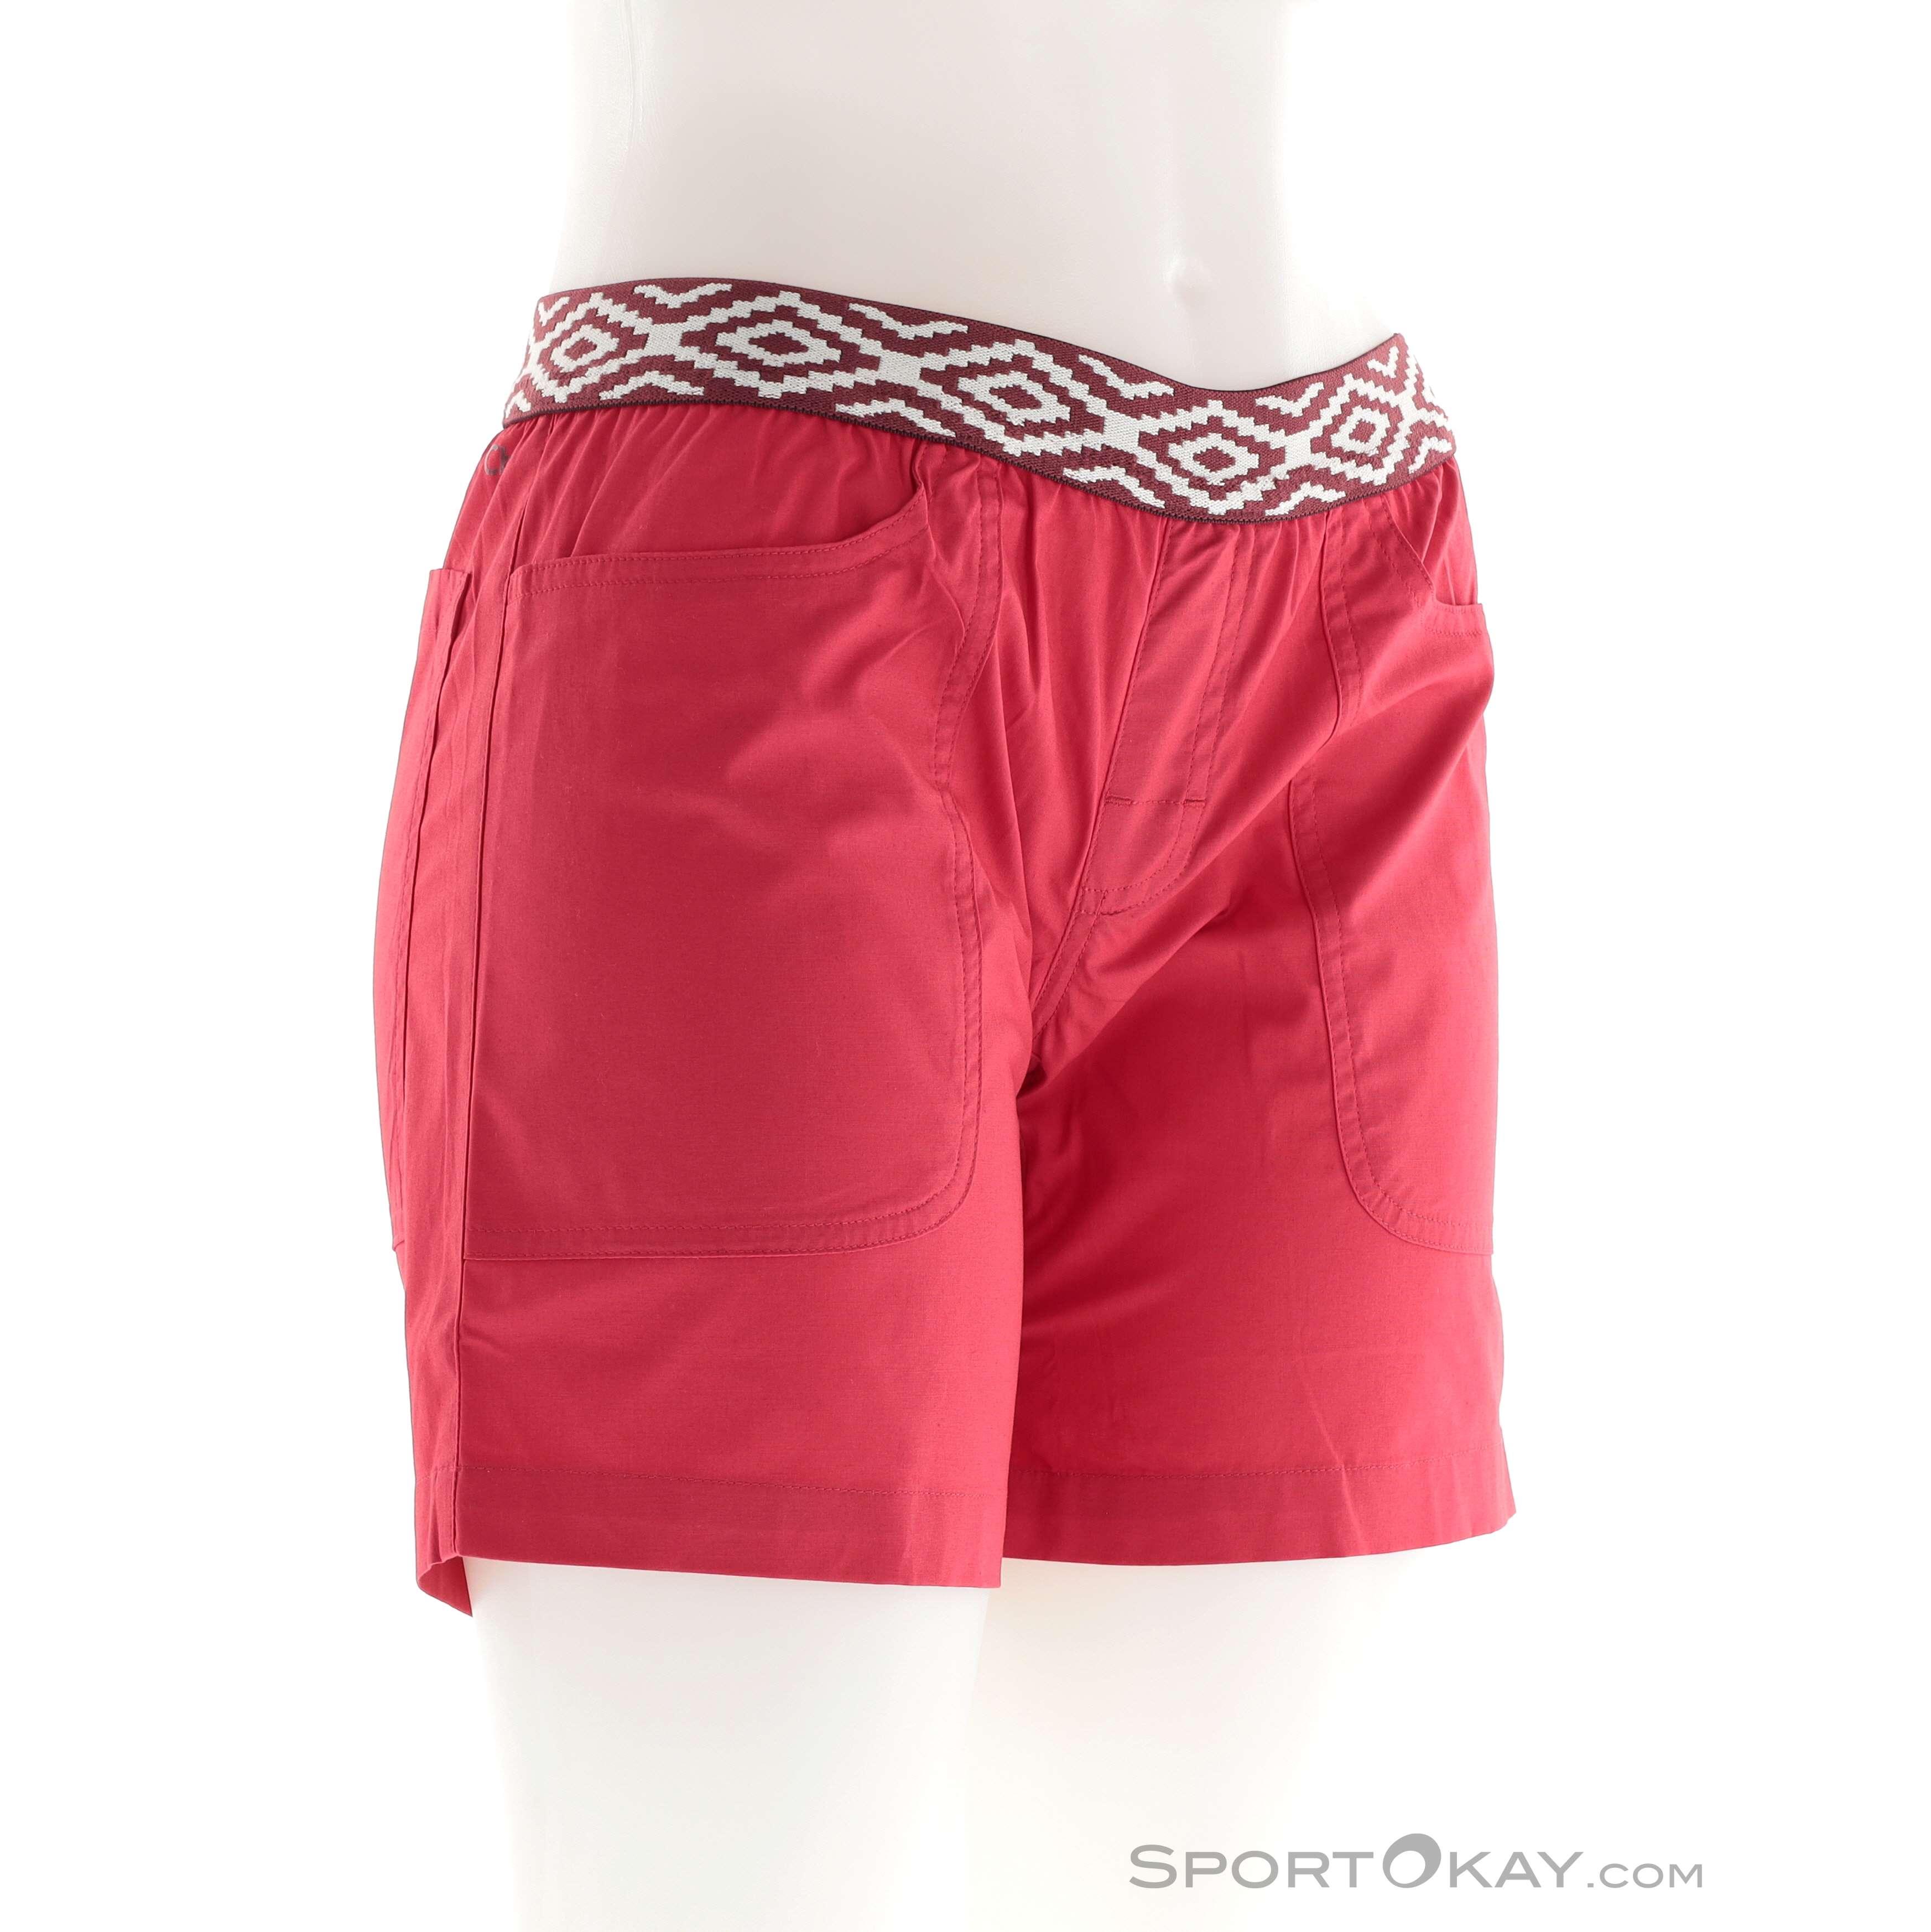 Red Chili Tarao Shorts Damen Klettershort-Pink-Rosa-S